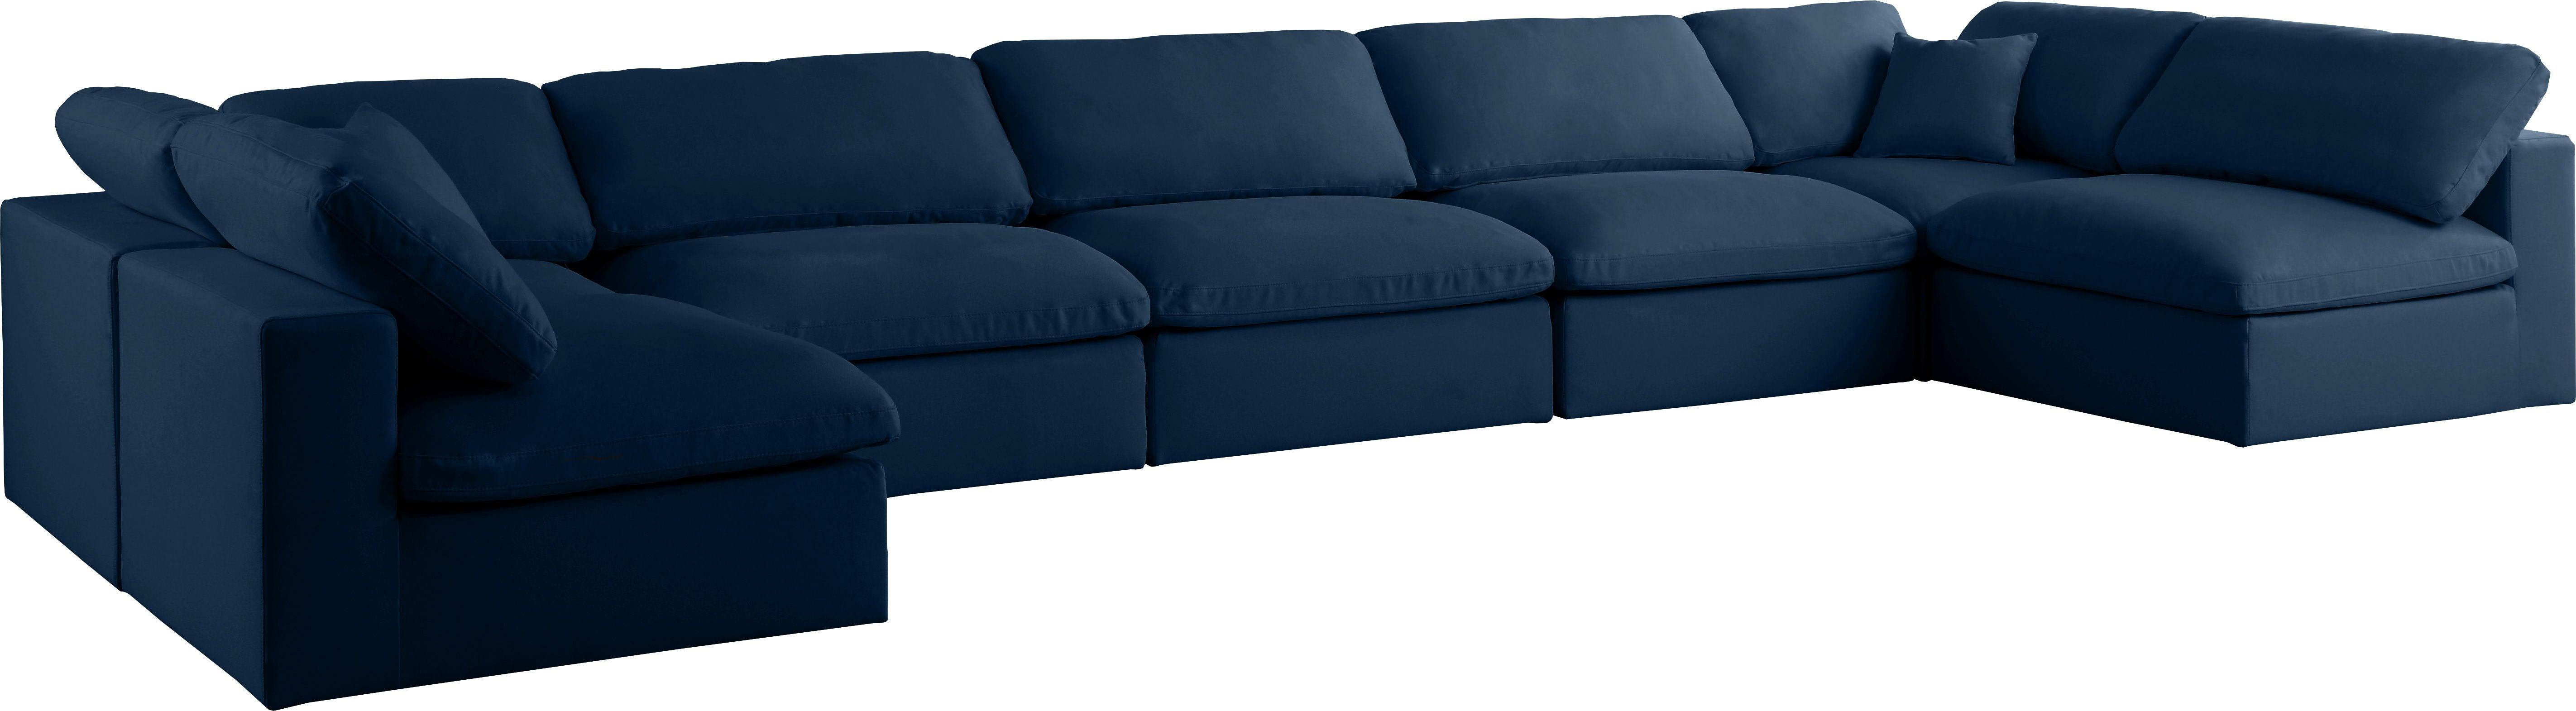 Meridian Furniture - Plush - Velvet Standart Comfort Modular Sectional - Navy - 5th Avenue Furniture